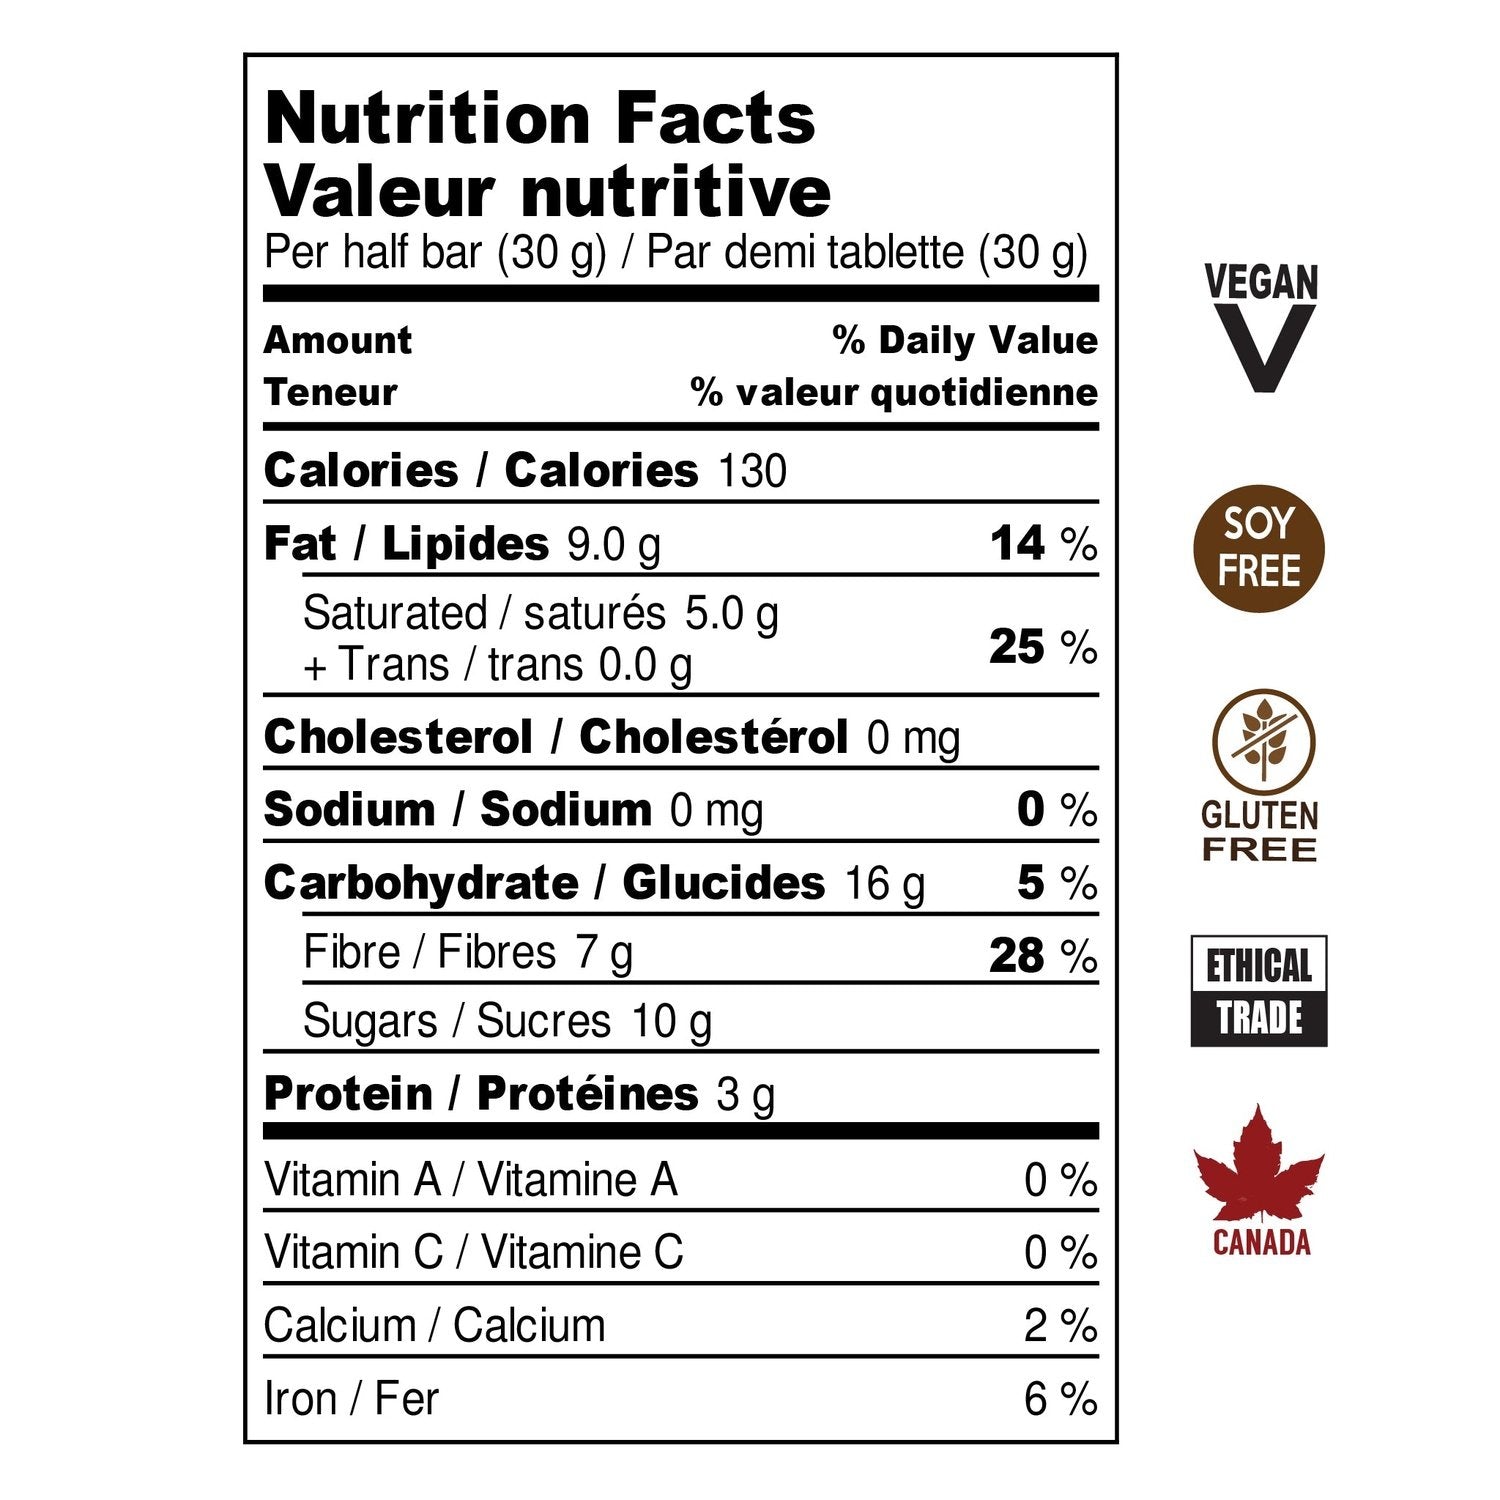 Cap-Haïtien 70% dark chocolate bar nutritional information. Vegan, Soy Free, Gluten Free, Ethical Trade, Made in Canada